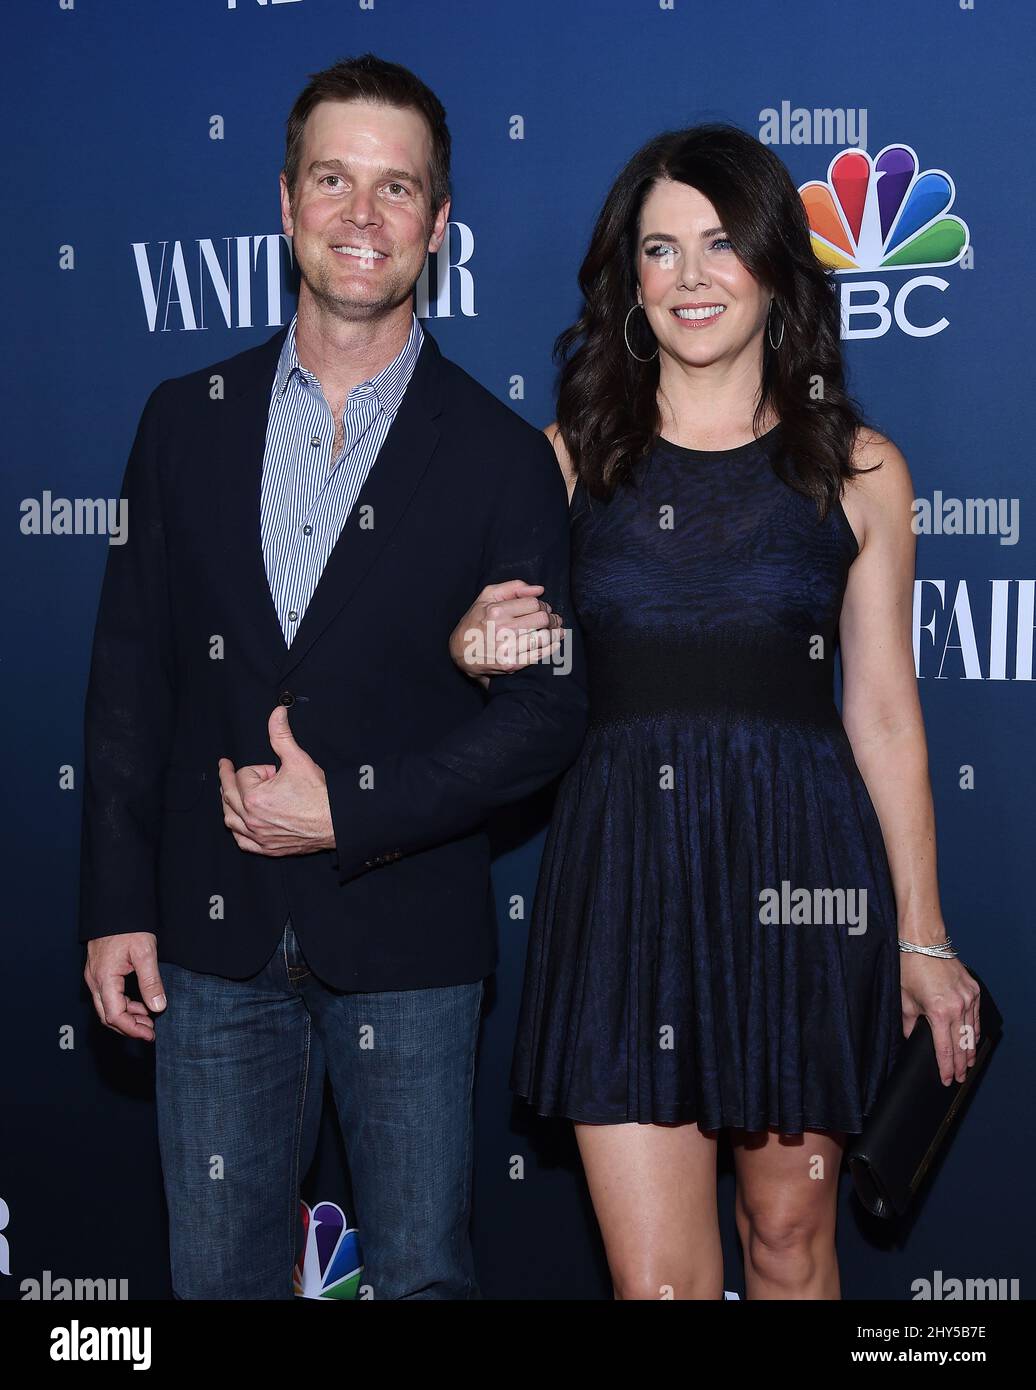 Peter Krause, Lauren Graham attending the NBC Vanity Fair 2014-2015 TV Season Red Carpet Event at the Hyde Sunset Kitchen Stock Photo